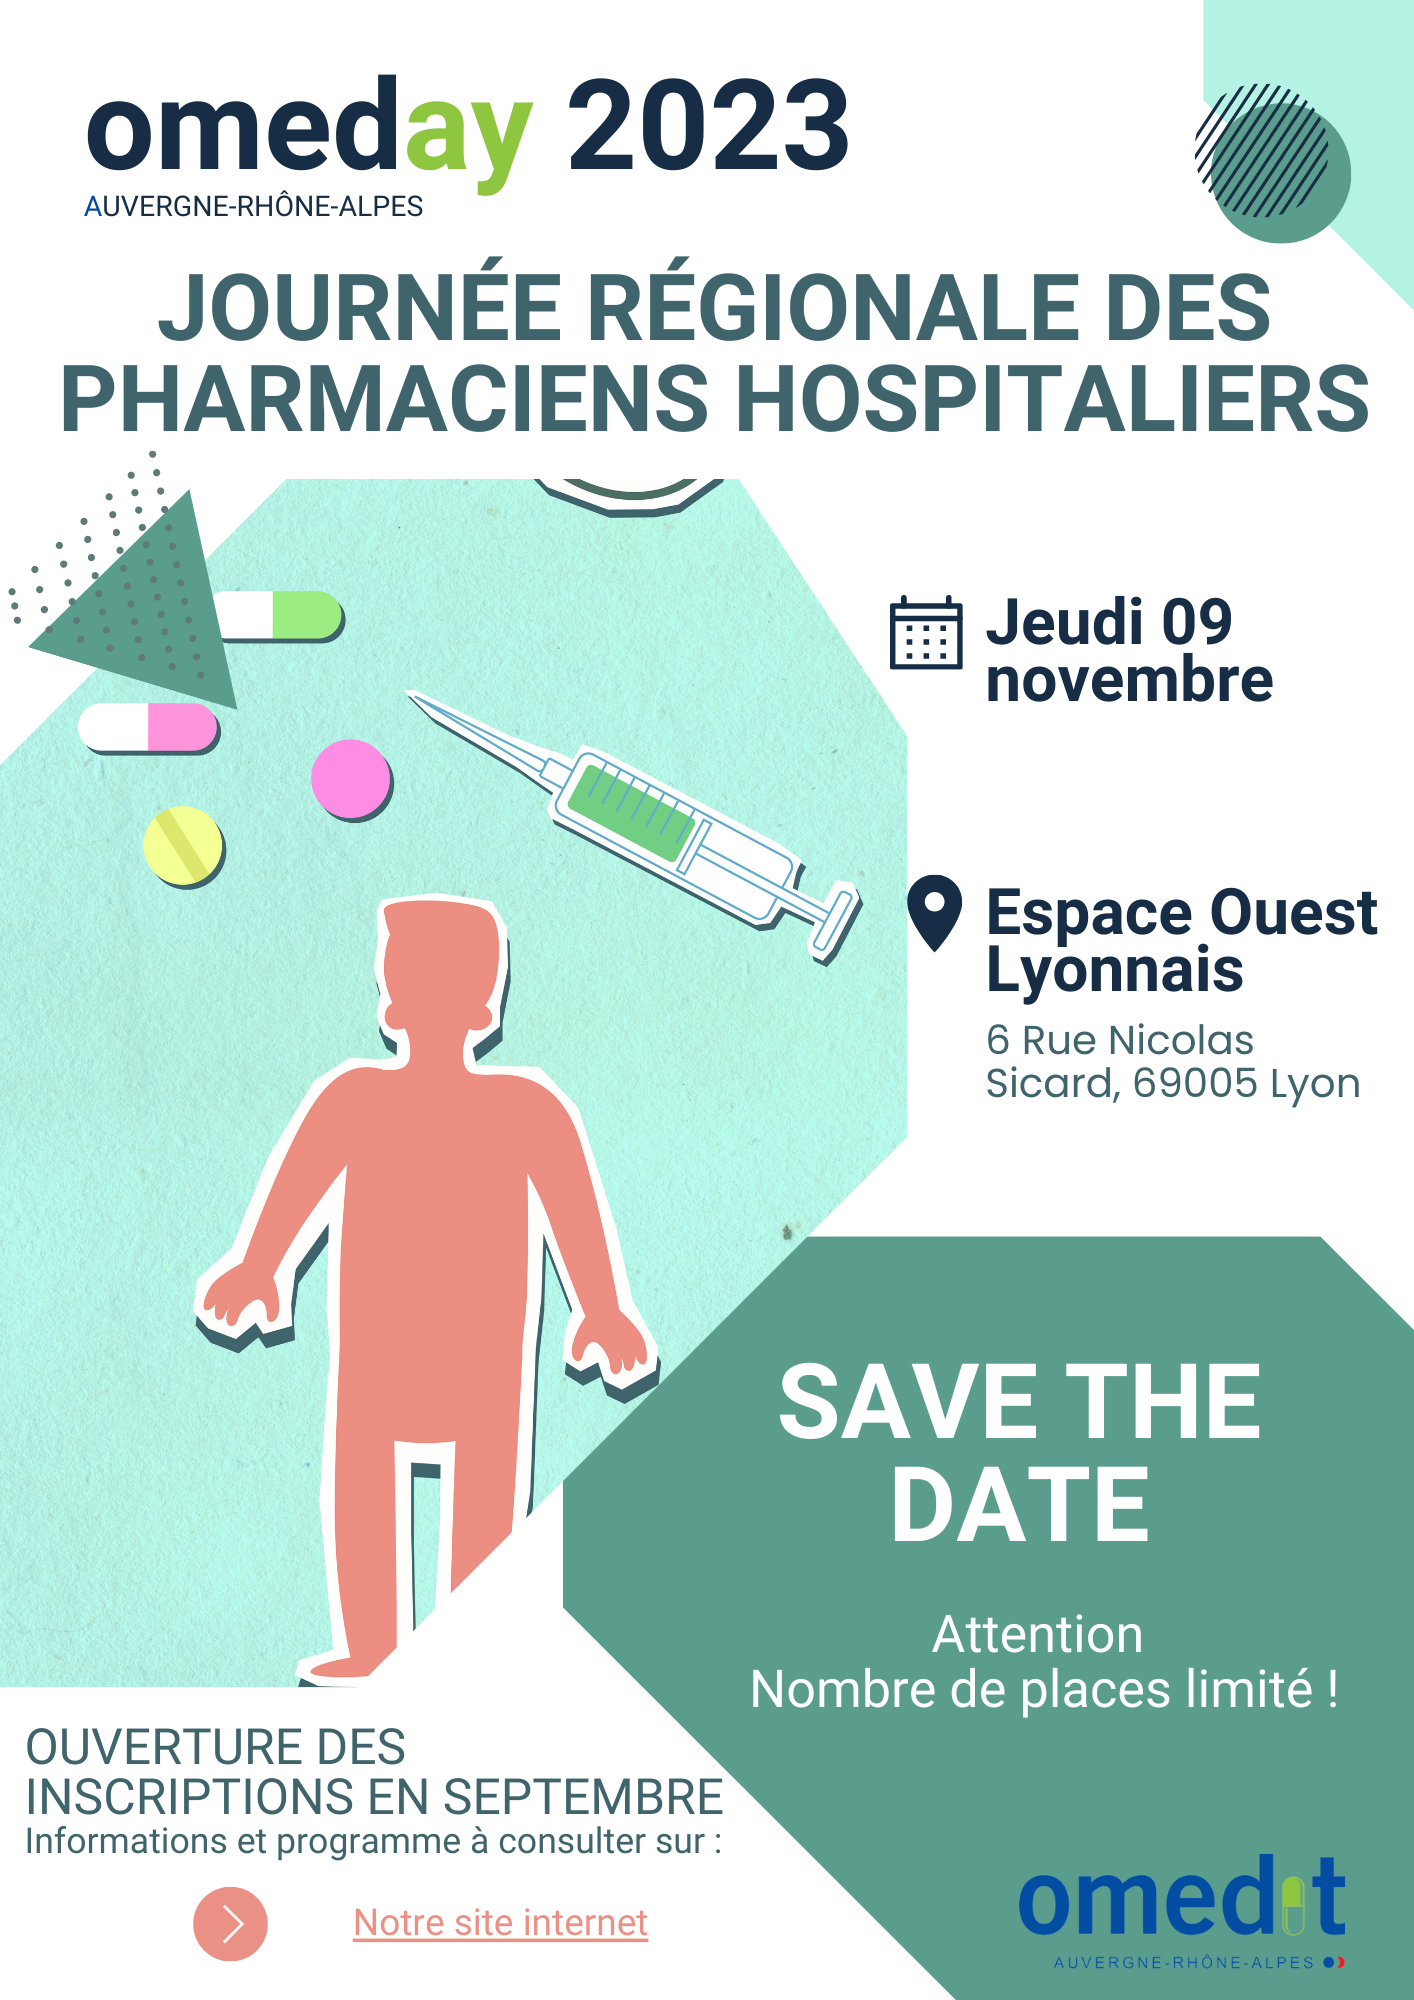 OMEDay 2023 SAVE THE DATE Journée régionale des pharmaciens hospitaliers